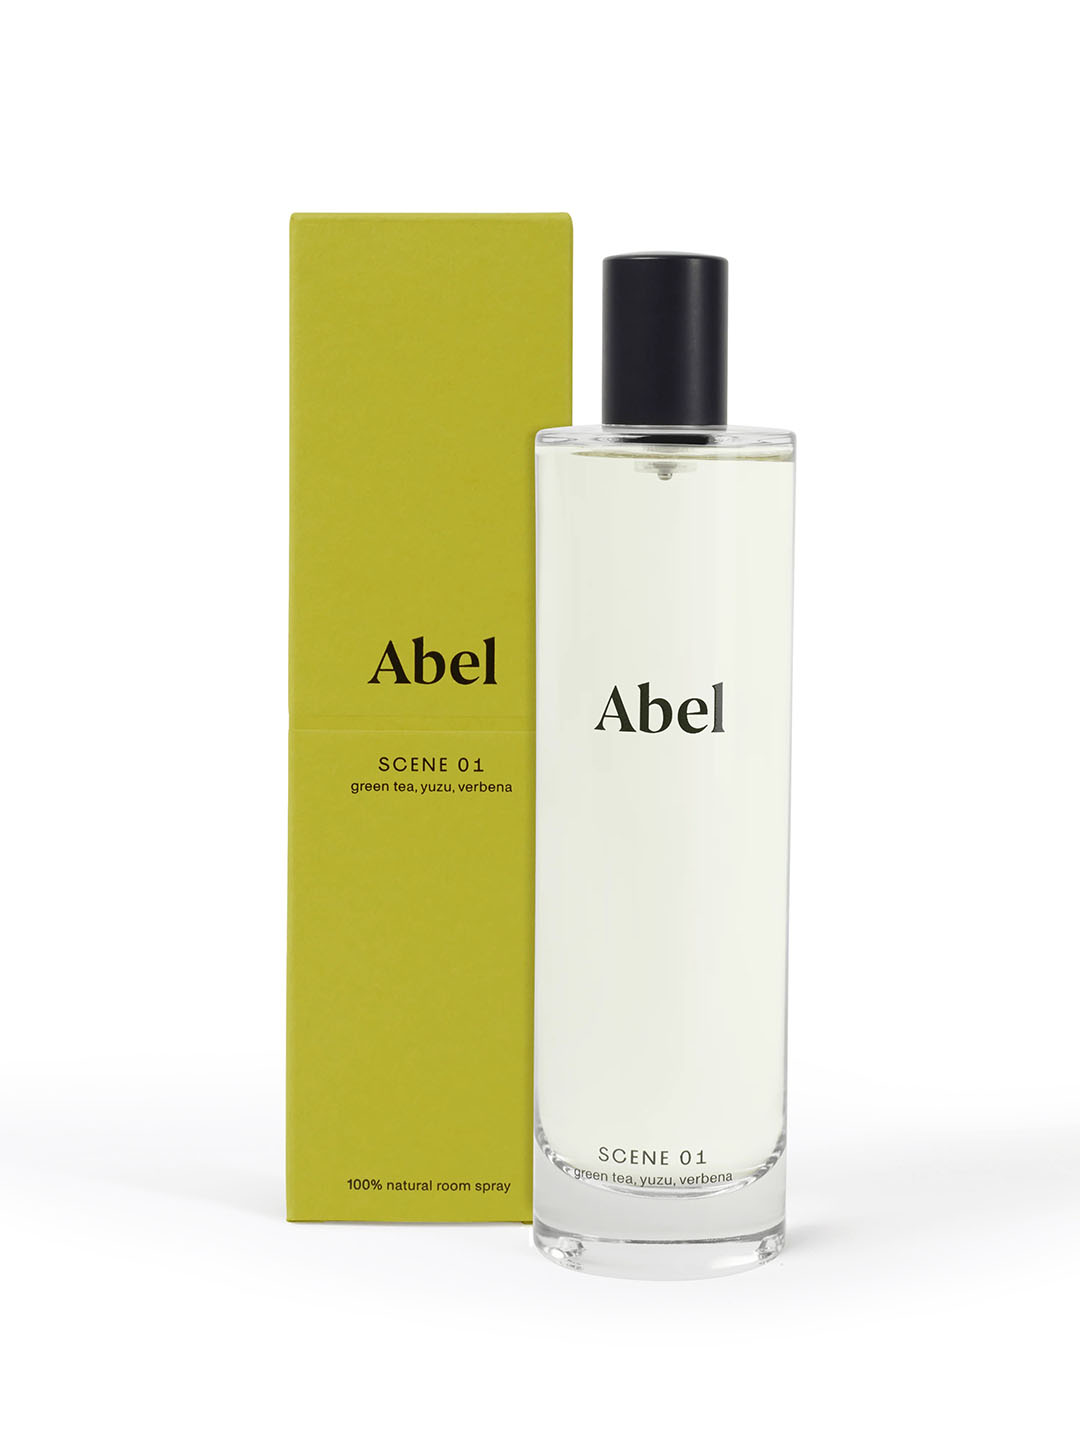 Bottle of Abel Room Spray – Scene 01 ⋅ green tea, yuzu, verbena with a green label alongside its packaging.